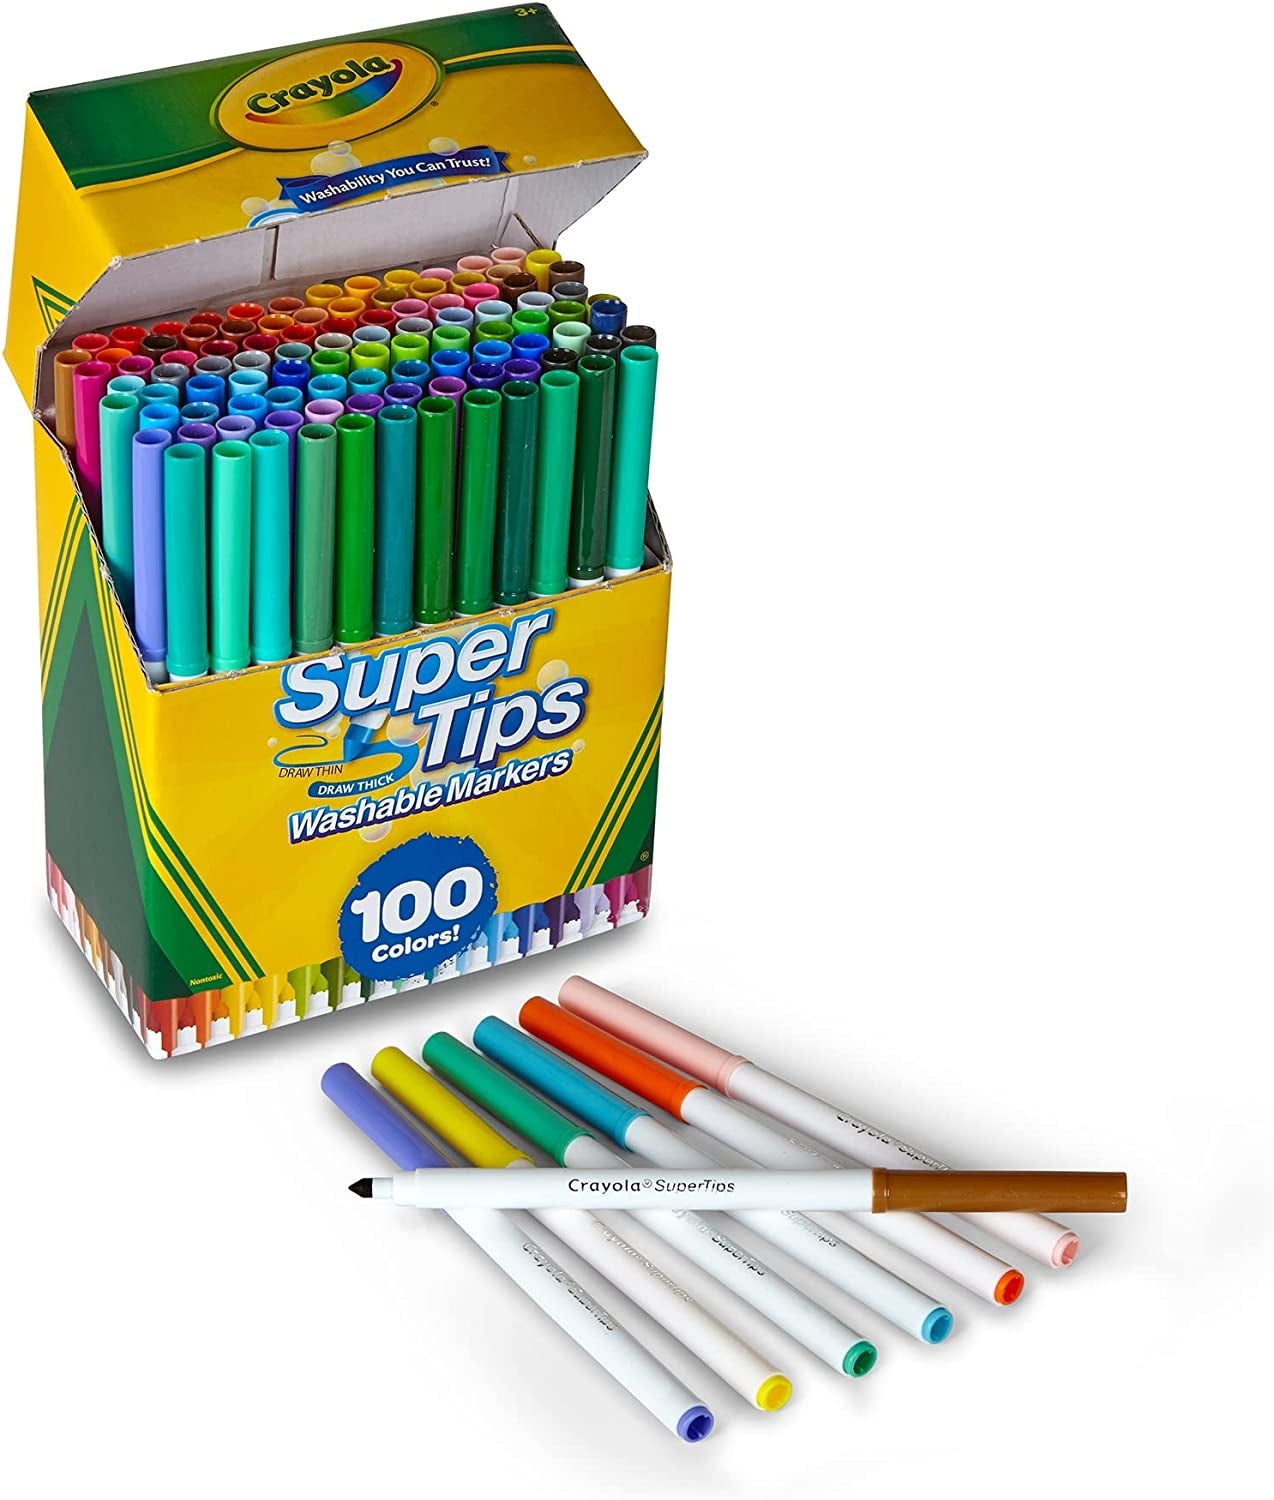 Yoobi Mini Gel Pens & Carrying Case | Neon, Metallic, Glitter Shades |  Multicolor Ink | 1.0mm Medium Tip | School, Home, Office Use, 24 Count  (Pack of